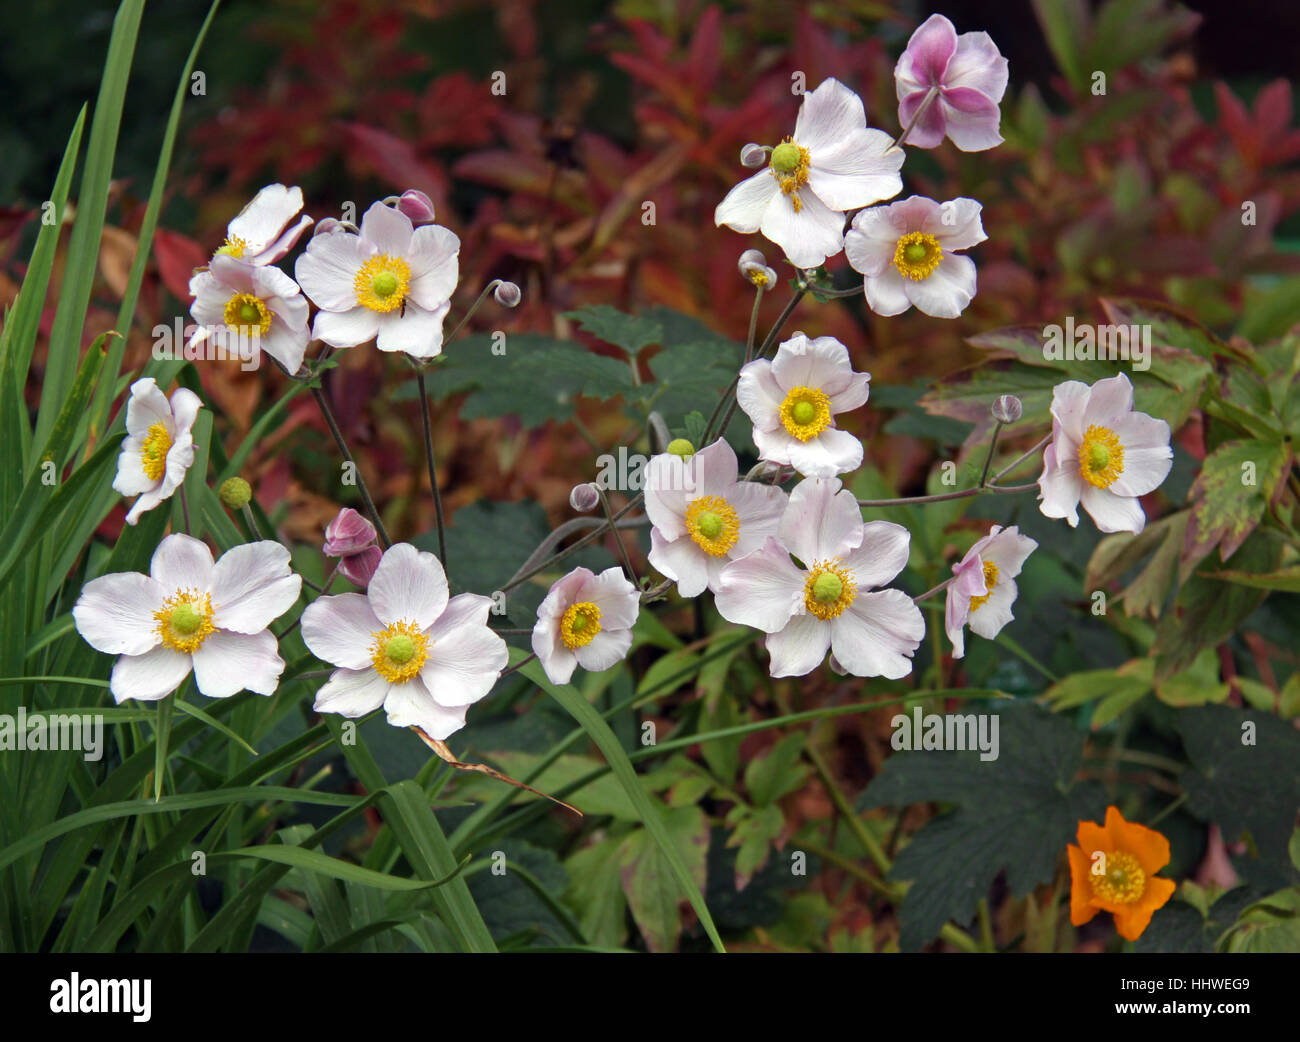 anemone, fall, autumn, flora, botany, anemone, september, fall, autumn, Stock Photo